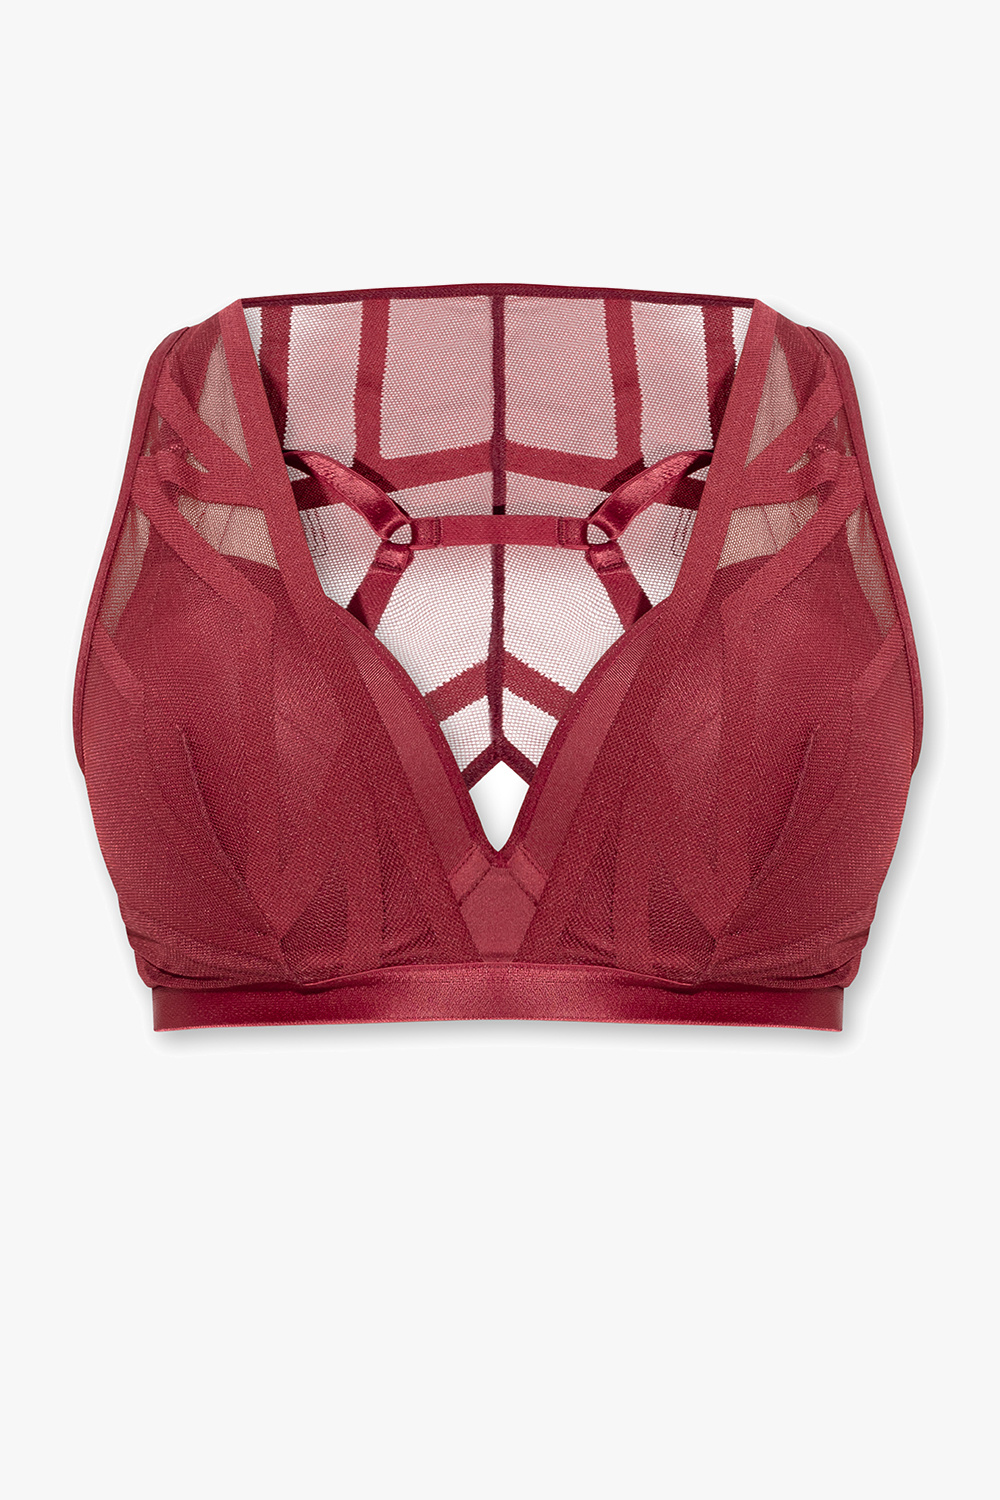 The Illusionist cabernet red lingerie  Marlies Dekkers designer bras &  briefs